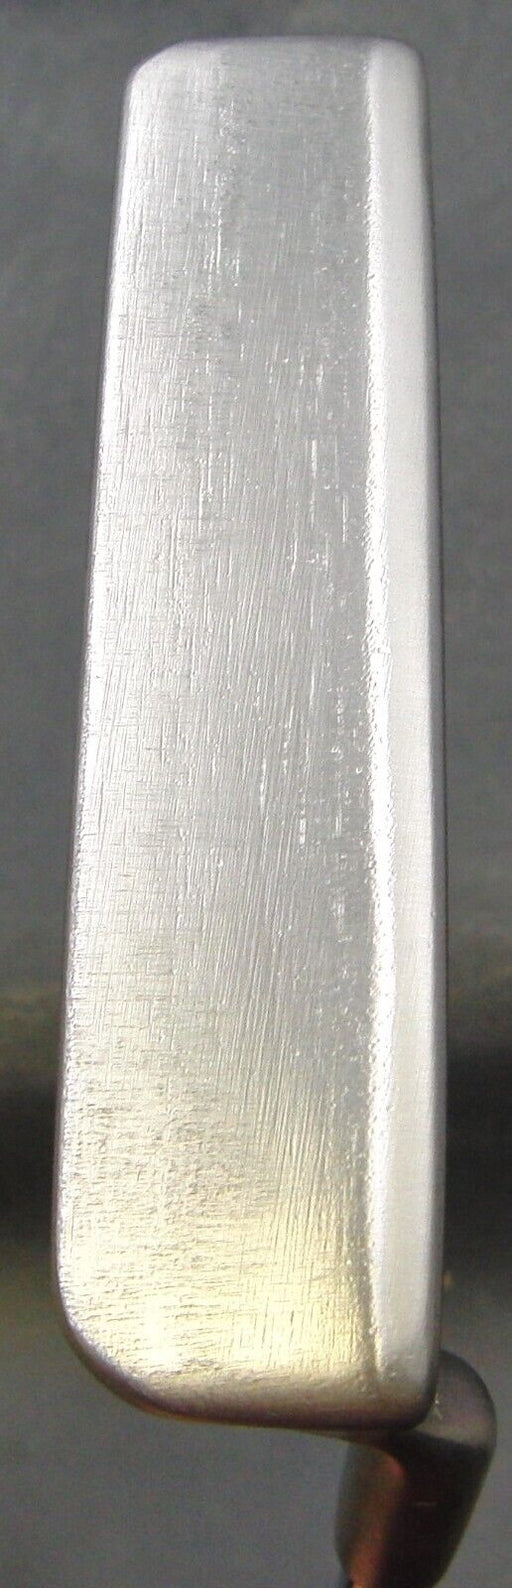 Refurbished & Paint Filled Ping J Blade Putter Steel Shaft 89cm Ping Grip*